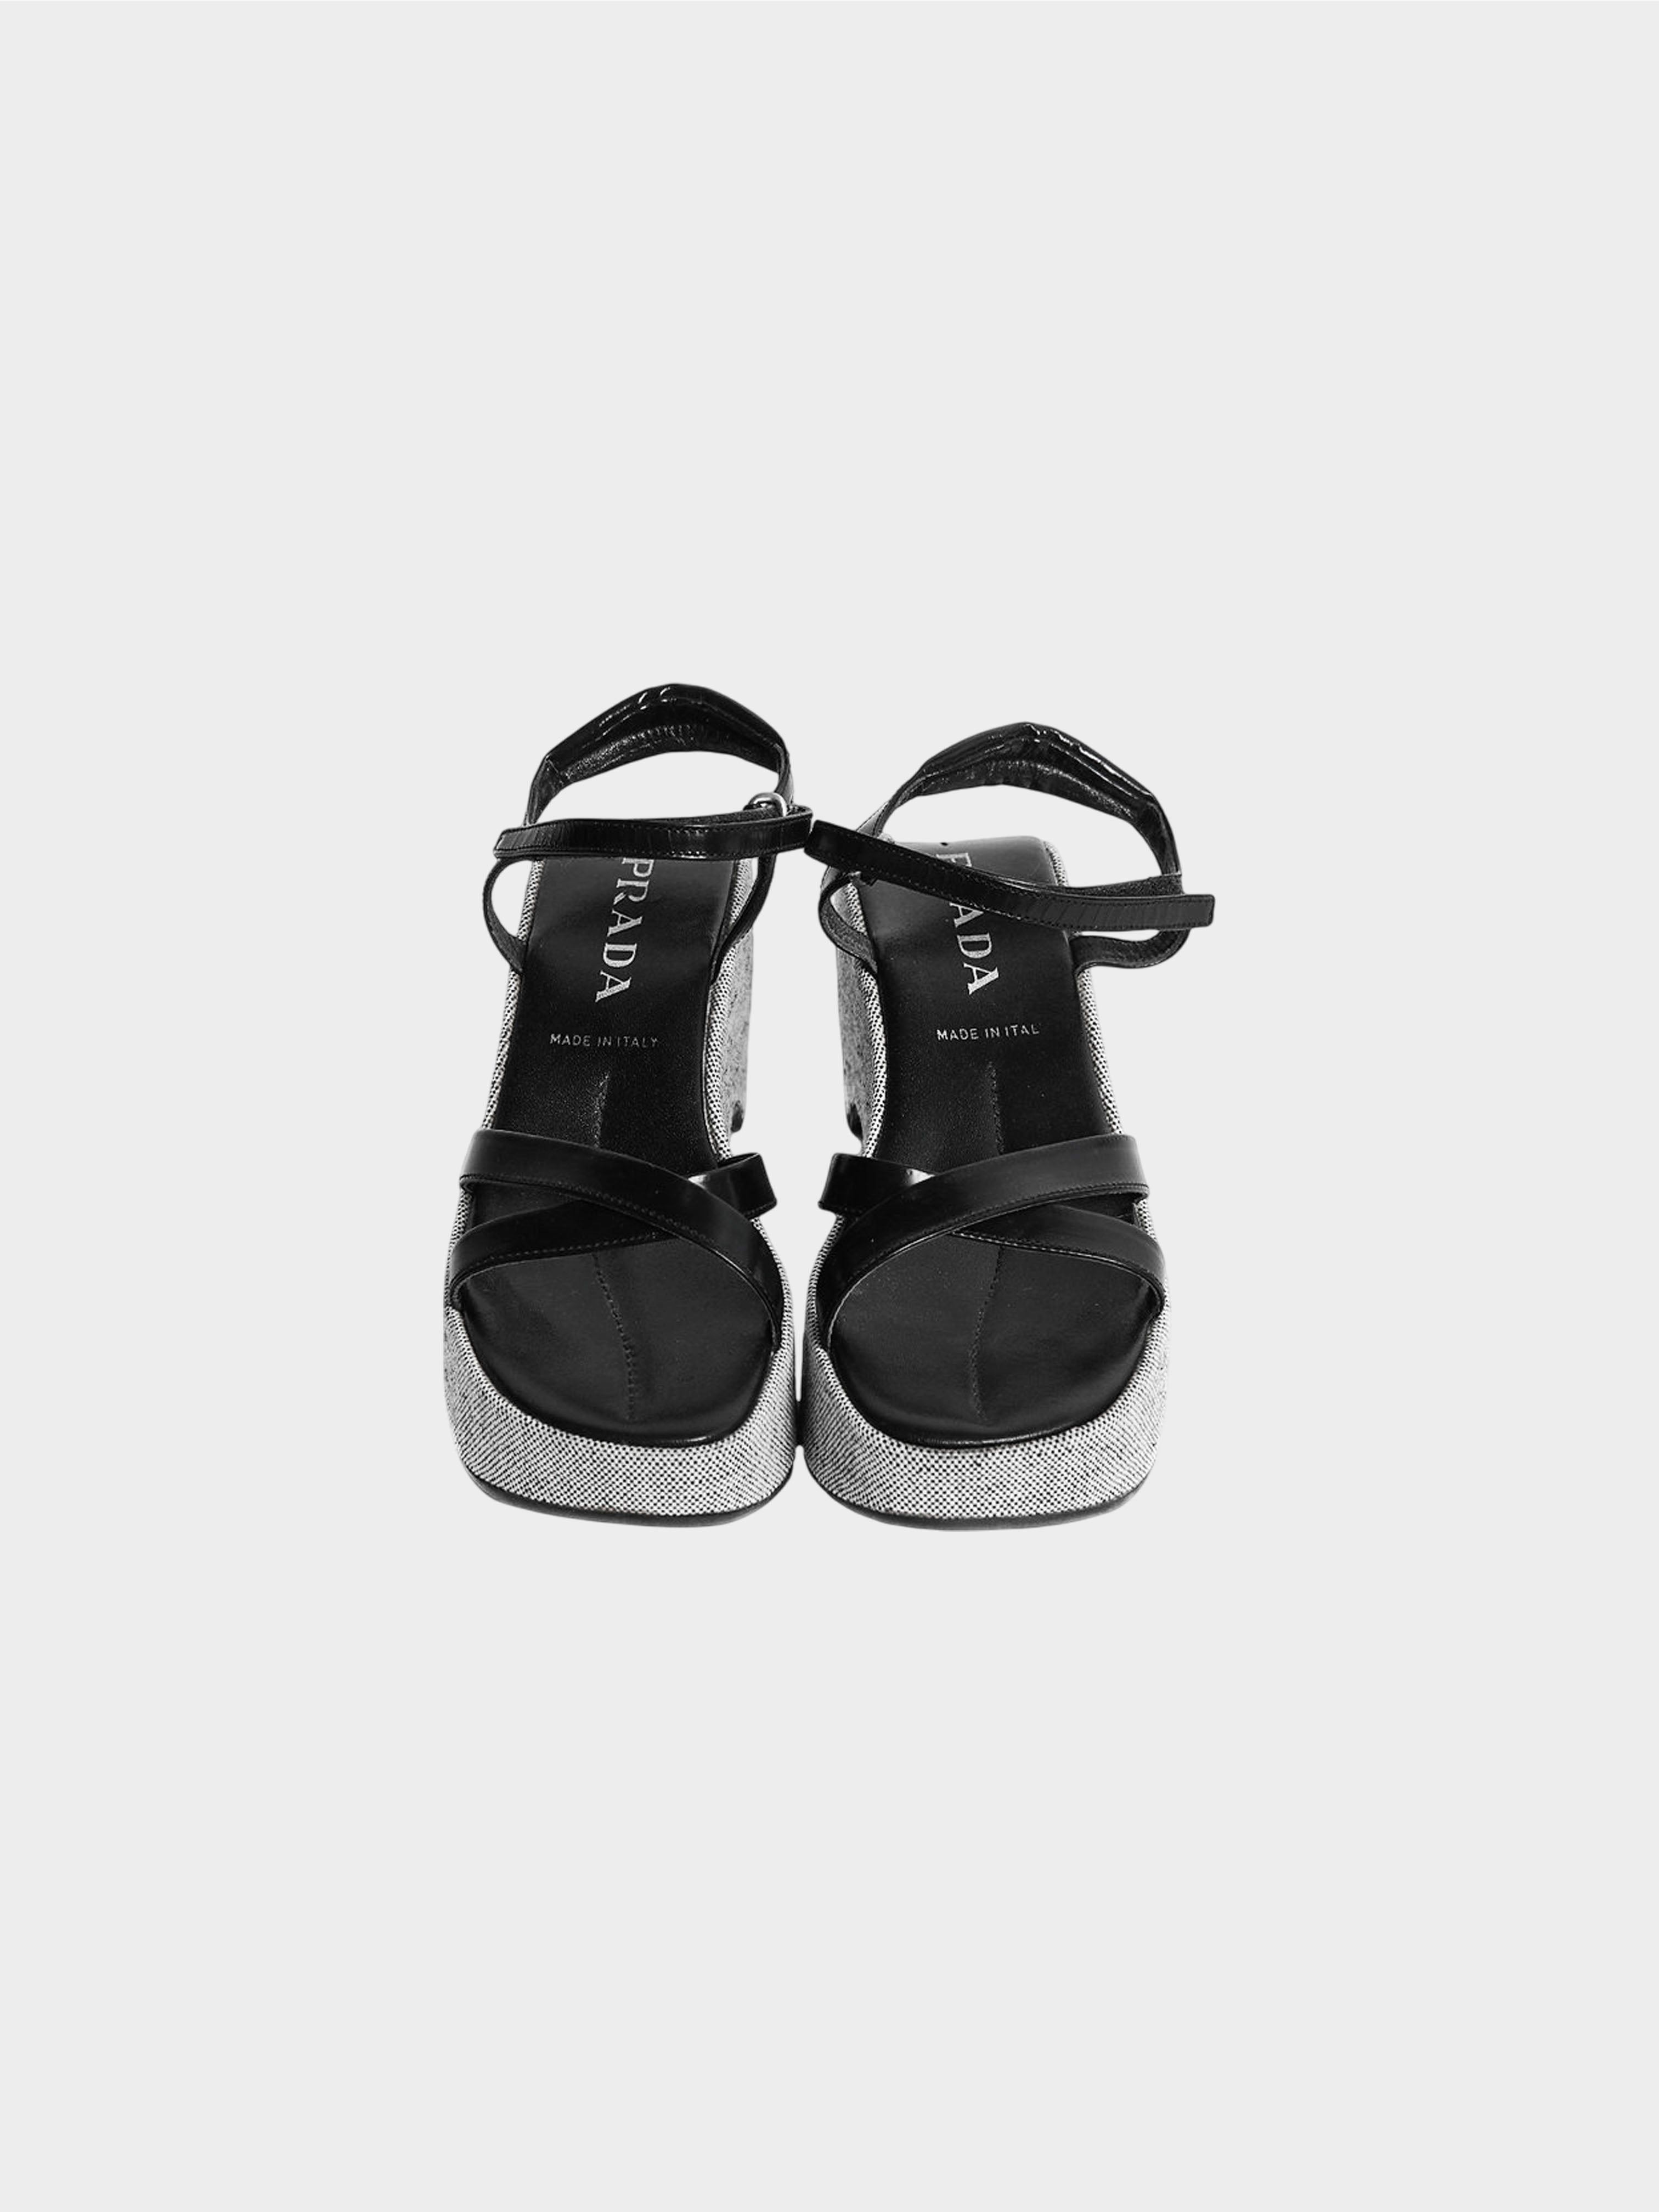 Prada SS 1999 Black and Grey Platform Sandals